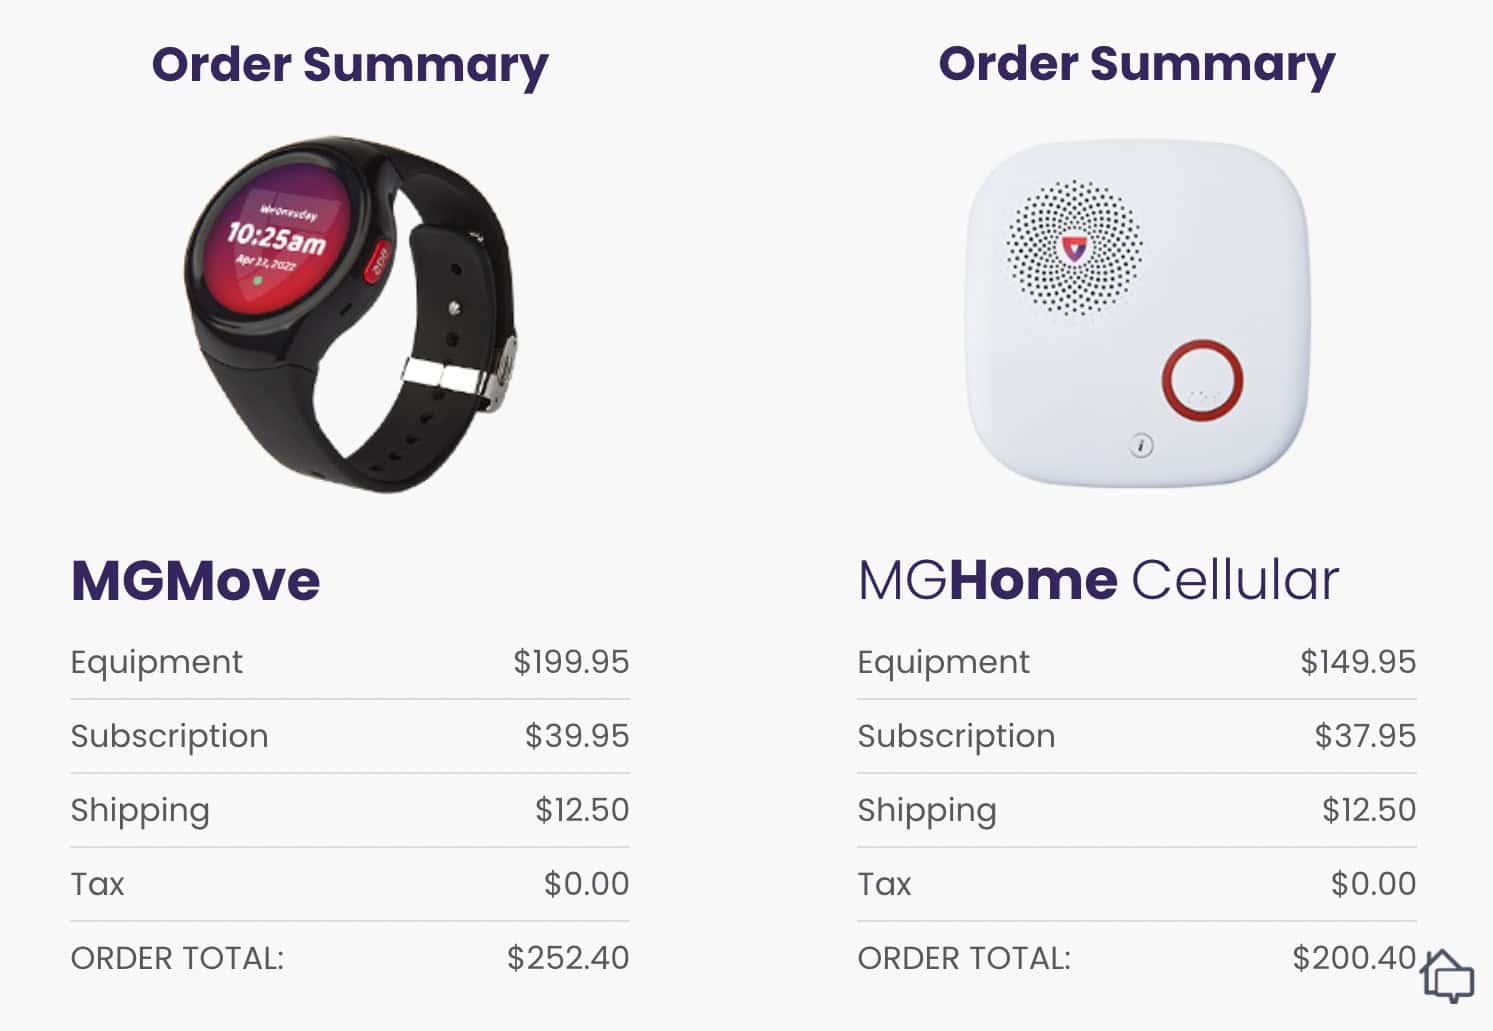 MGMove and MGHome Cellular order summary